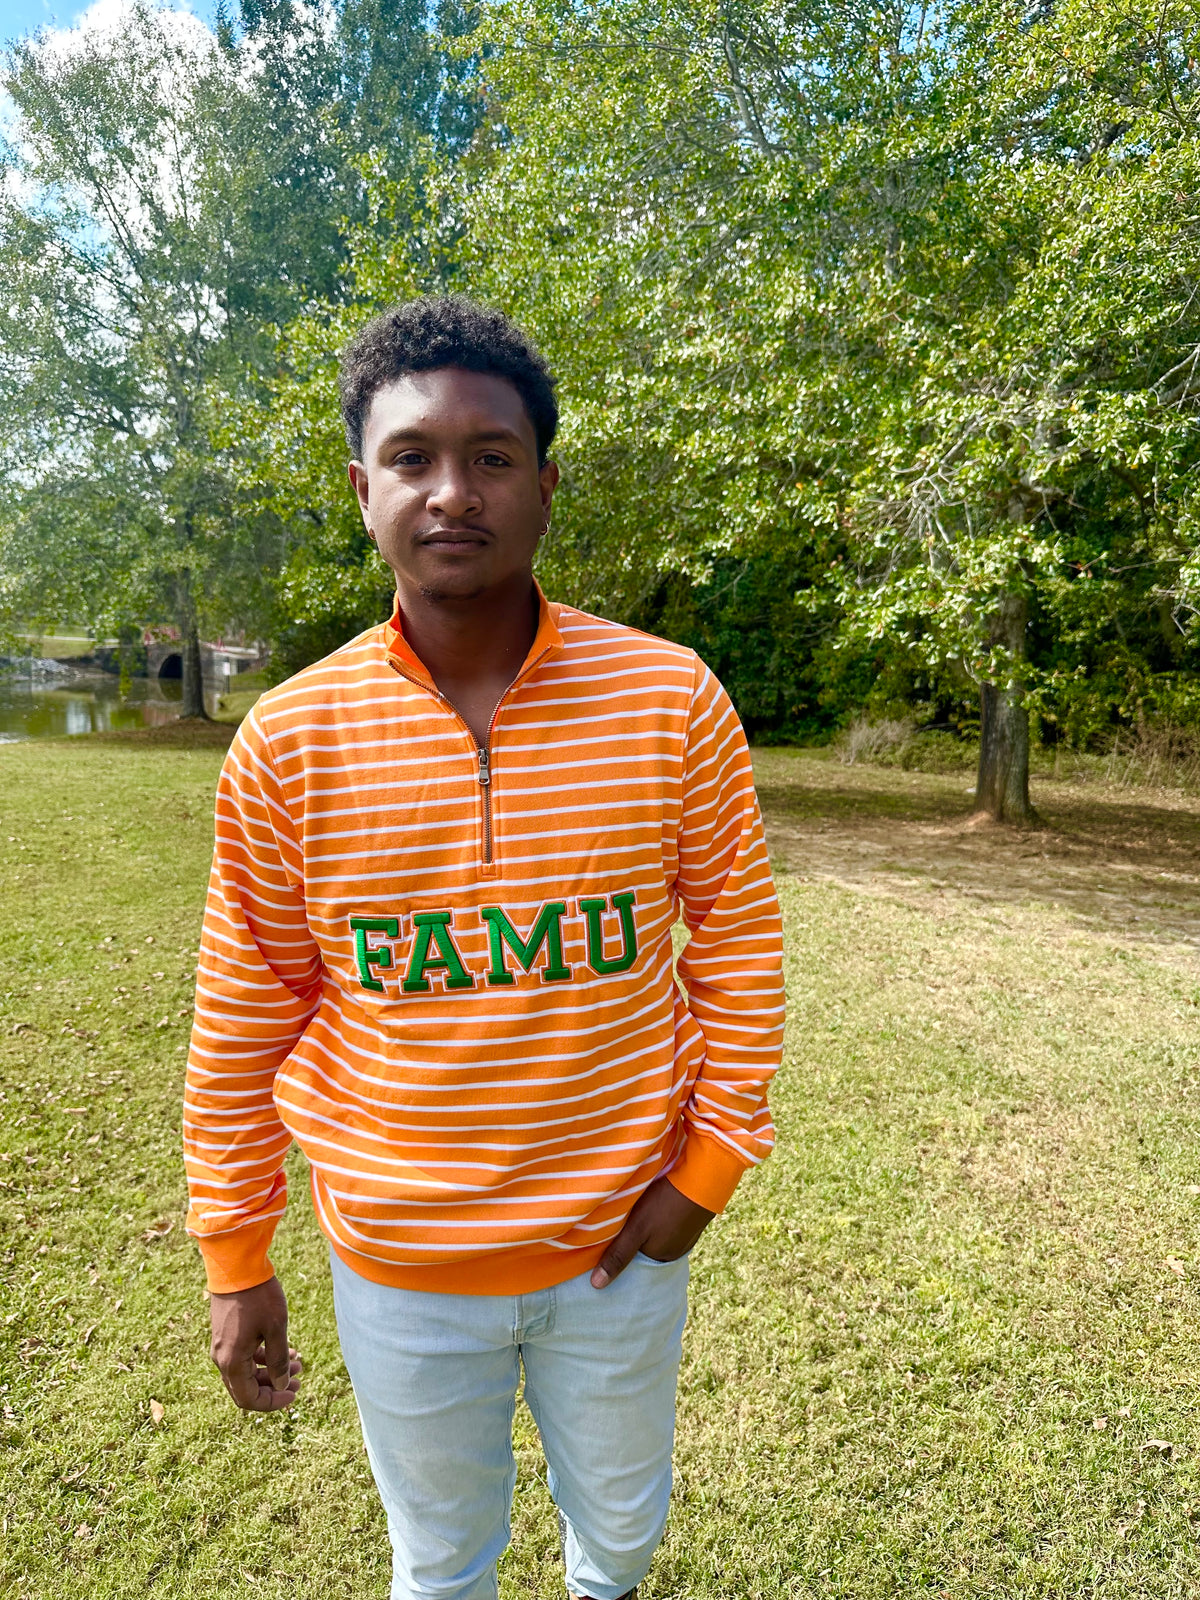 Florida A&M University Striped Zip-Up Sweatshirt (Unisex)